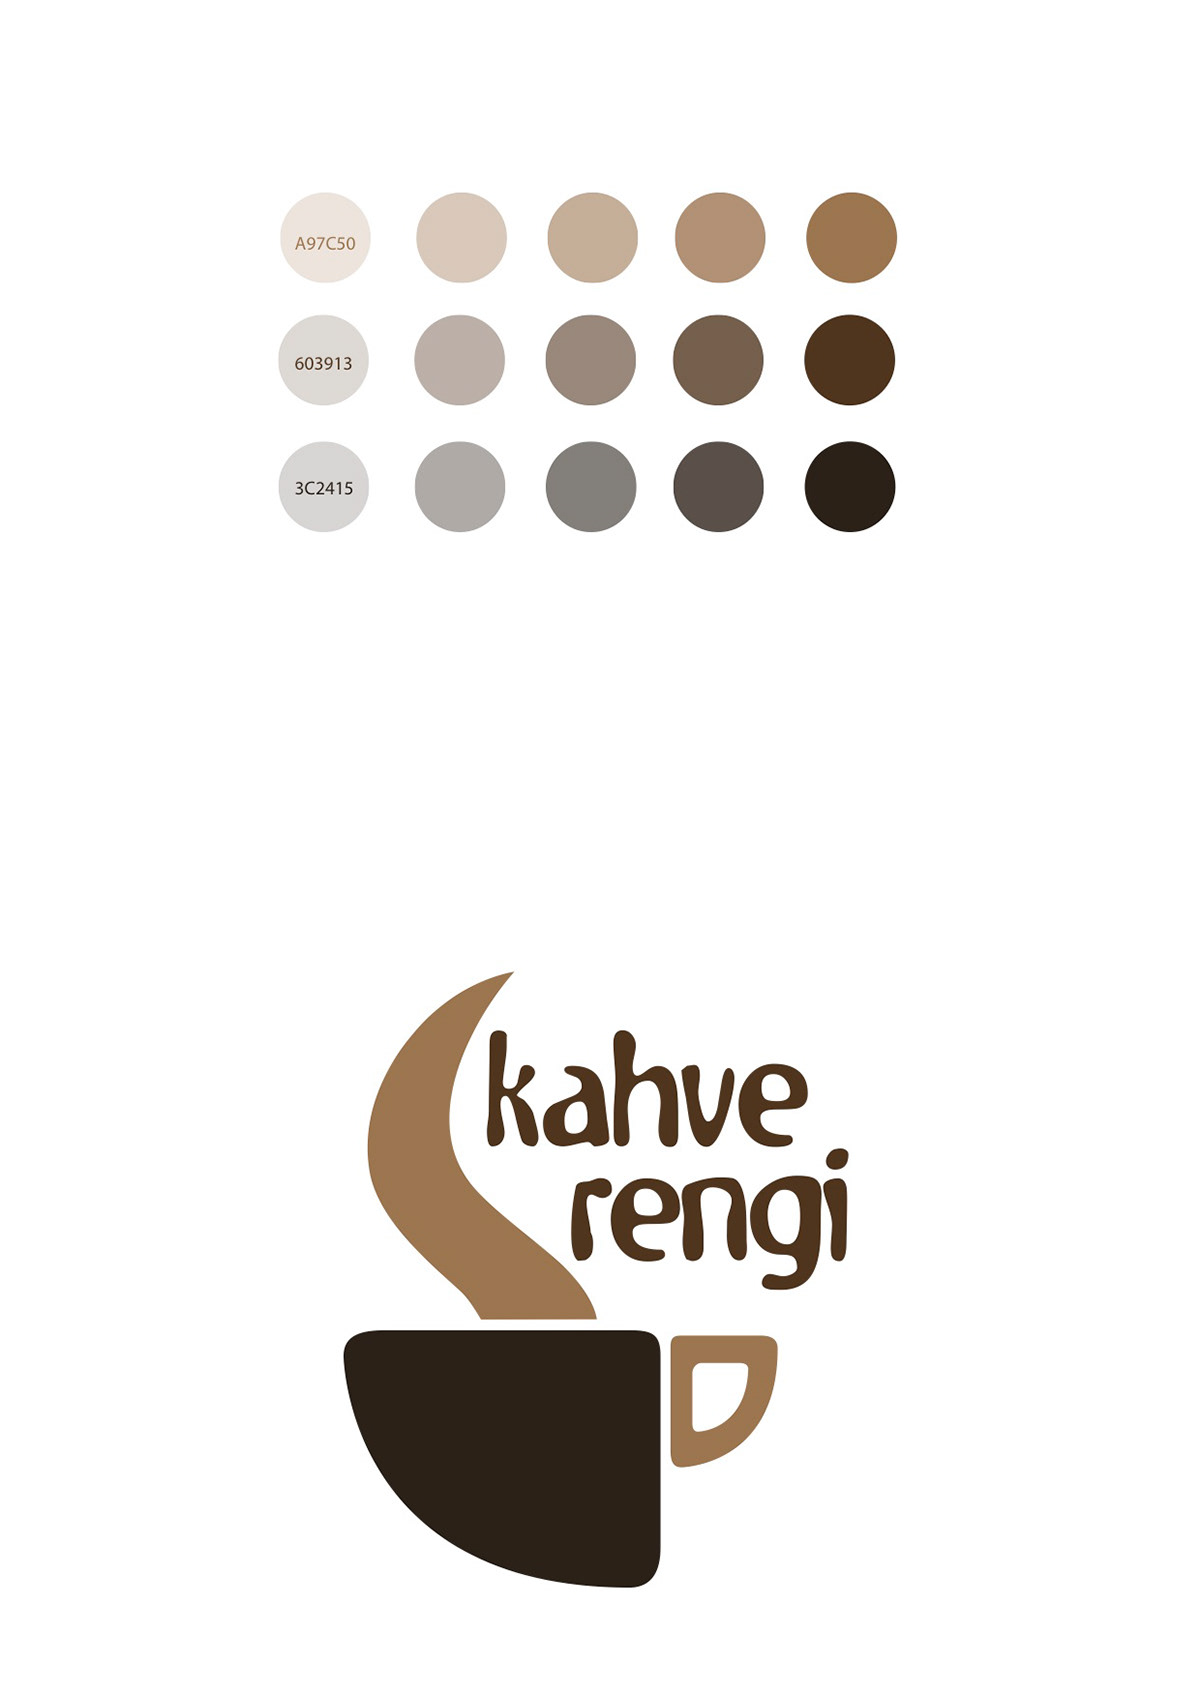 brown  kahverengi  coffee  branding brand identity  corporate identity  cafe  coffee brand  FOOD  DRINK